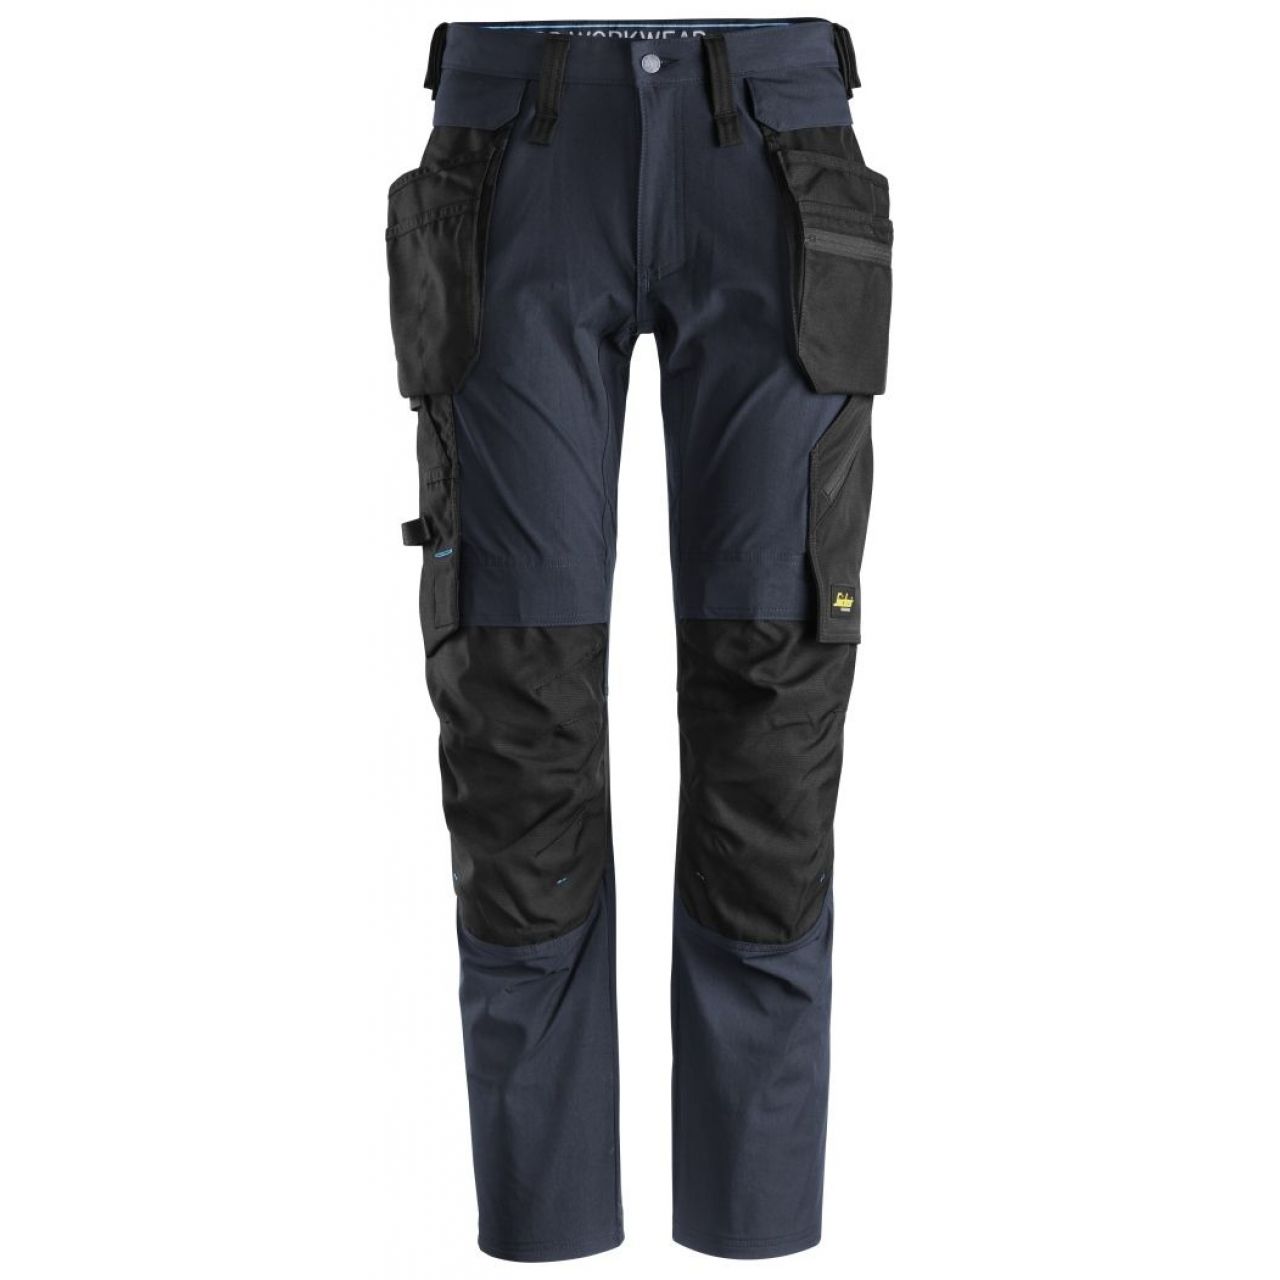 Pantalon + bolsillos flotantes desmontables LiteWork azul marino-negro talla 200